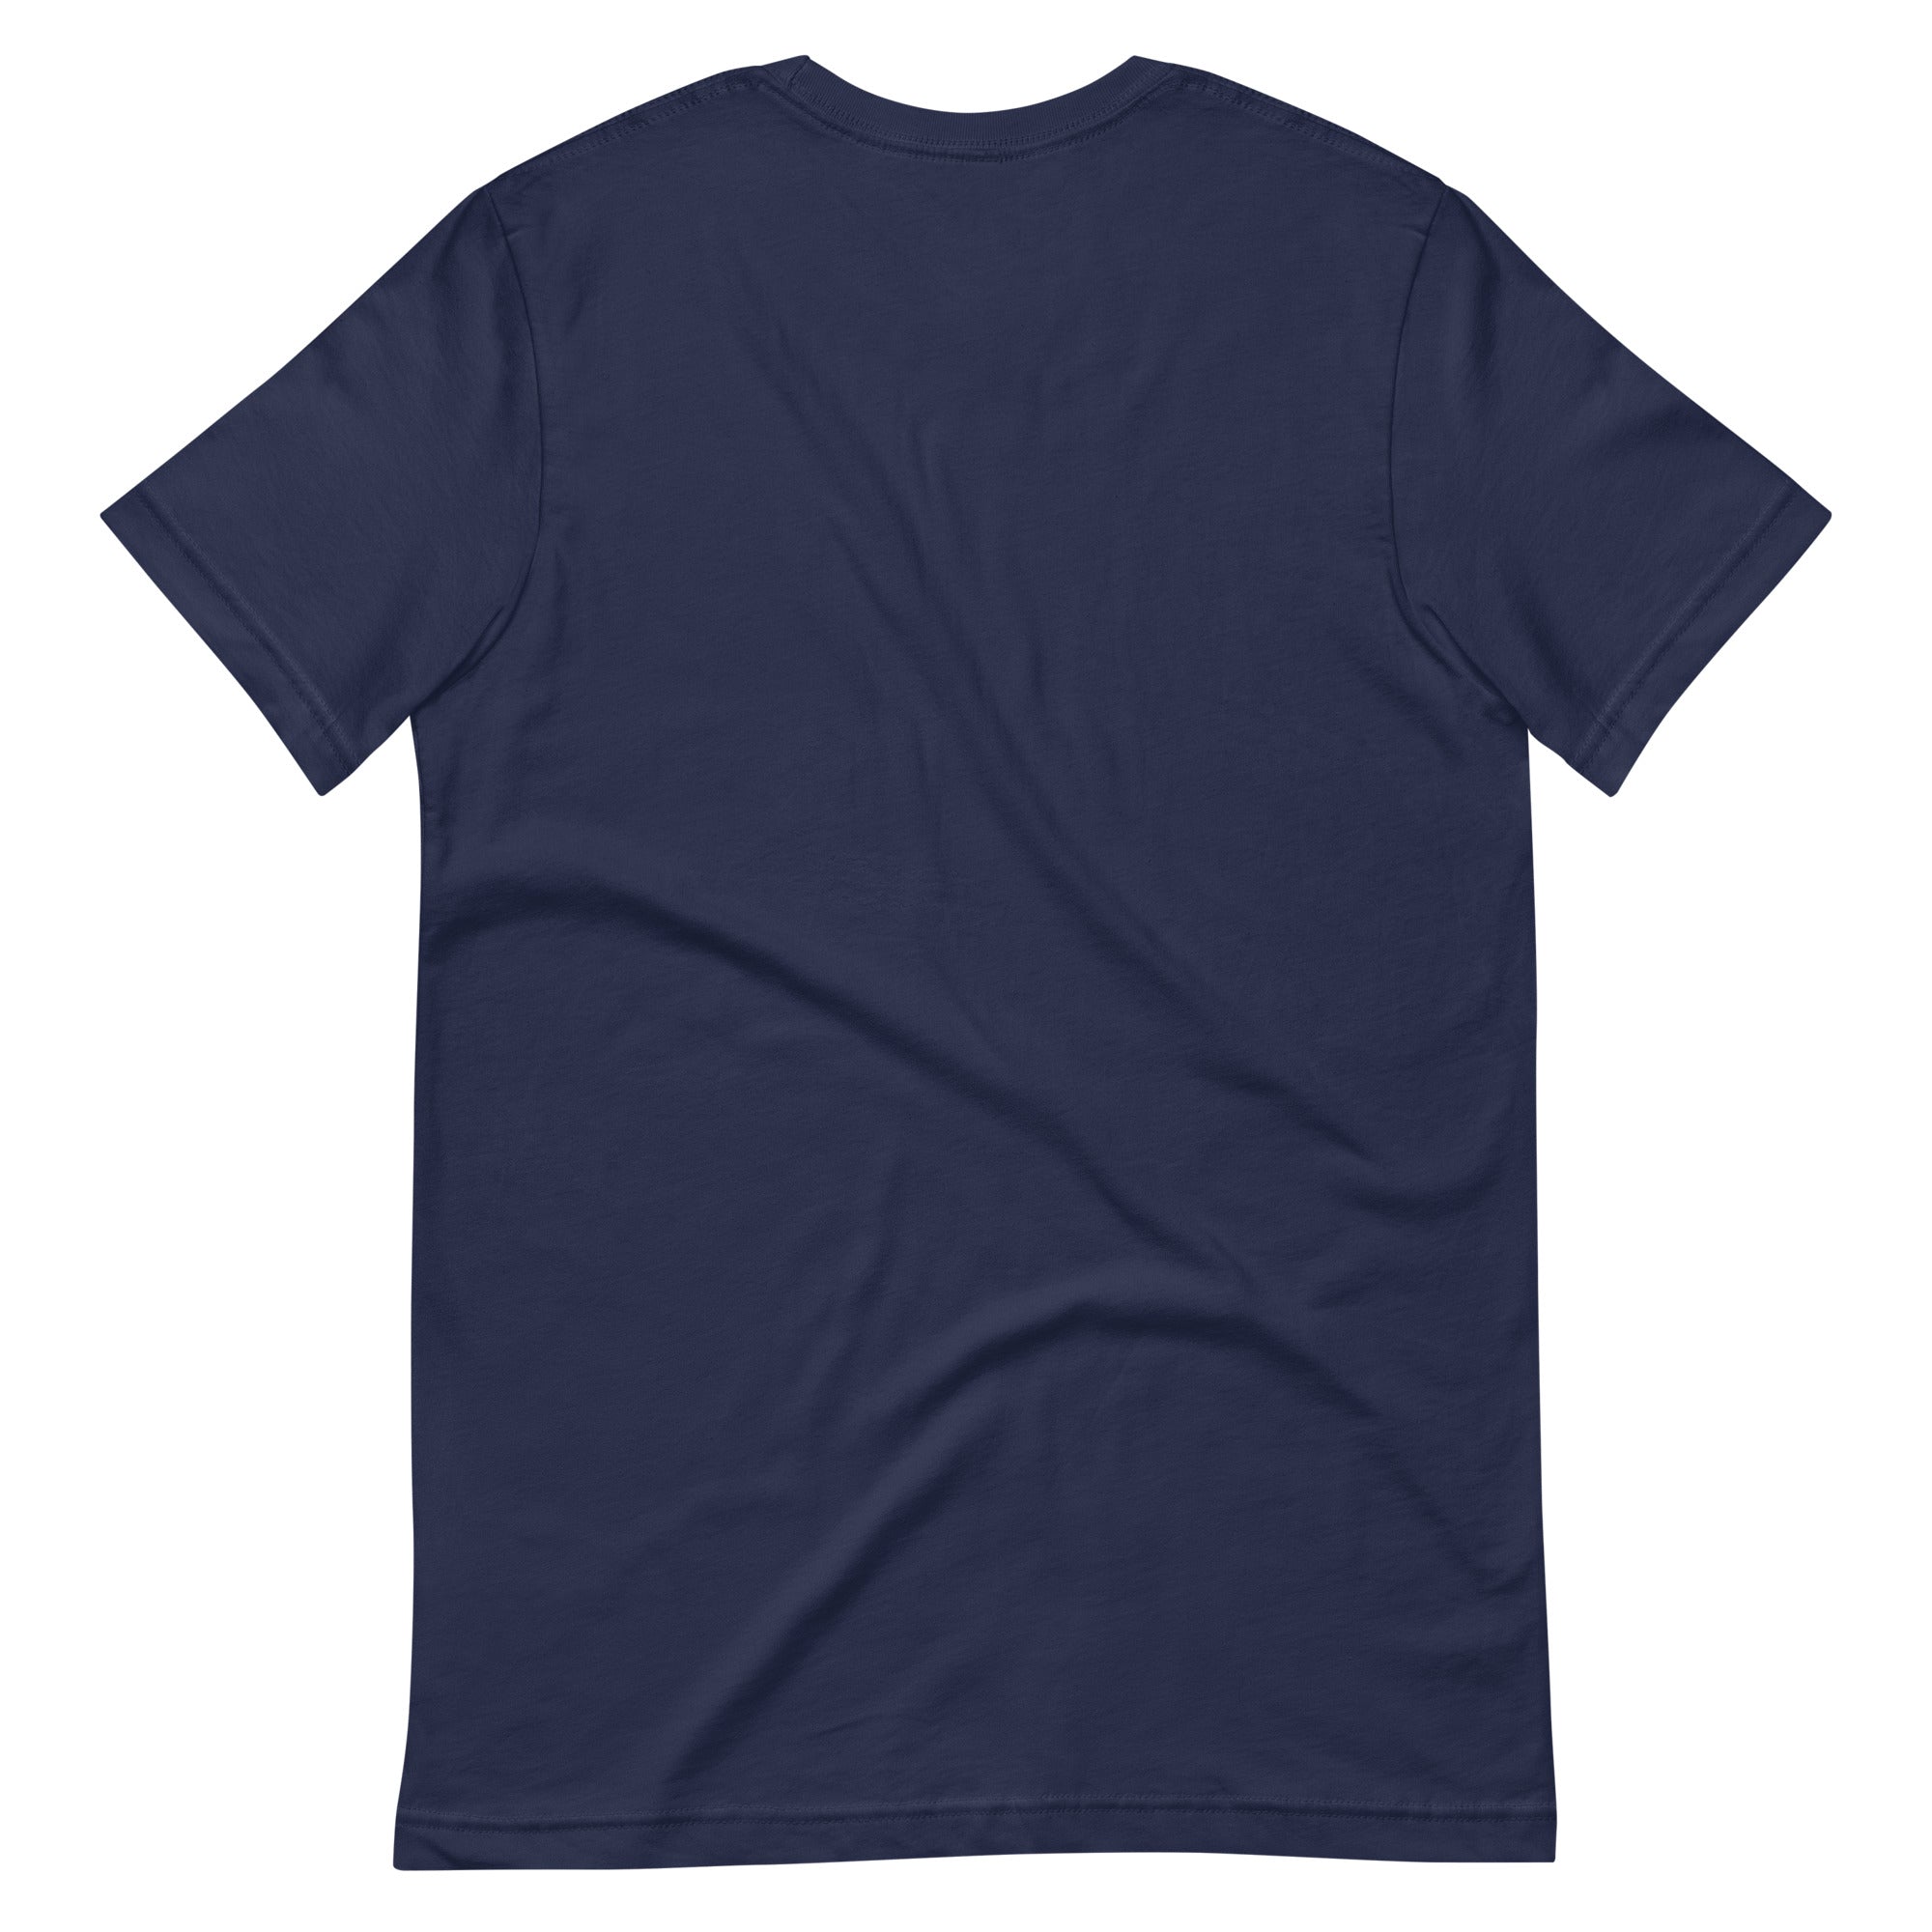 Arches T-Shirt (Navy) - Potrero Hill | San Francisco, CA